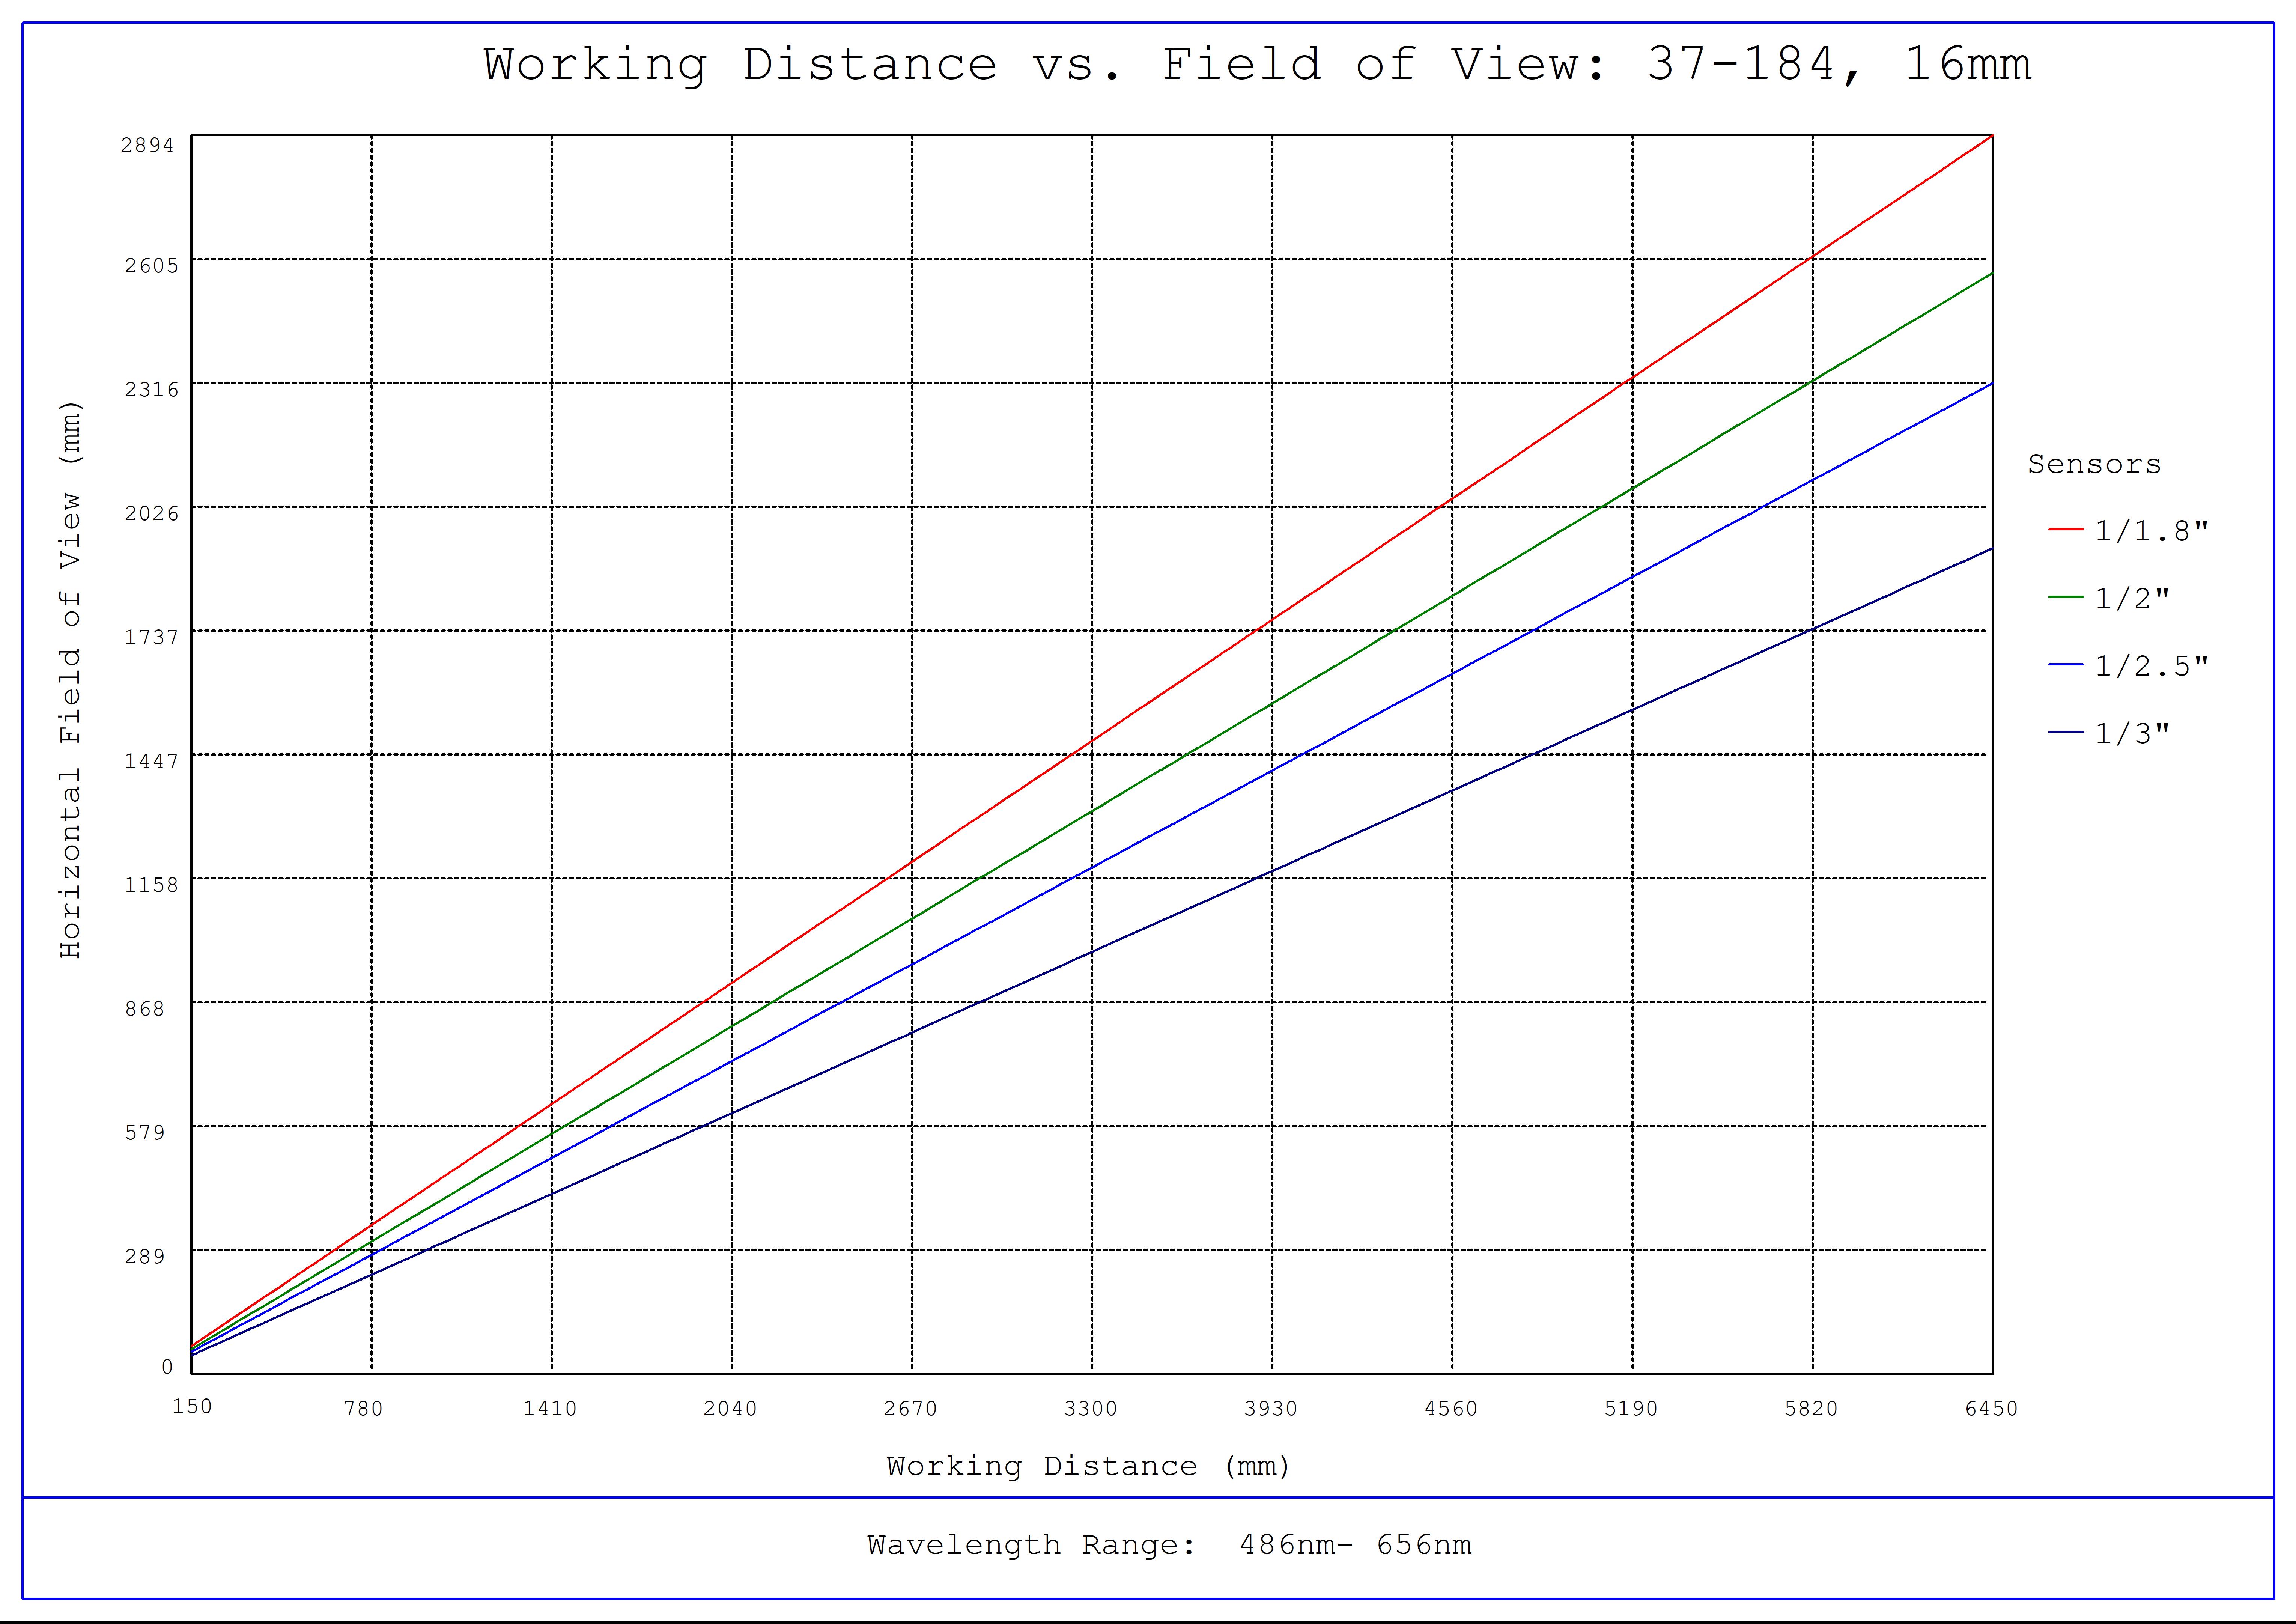 #37-184, 16mm FL f/8.0 Blue Series M12 Lens, Working Distance versus Field of View Plot